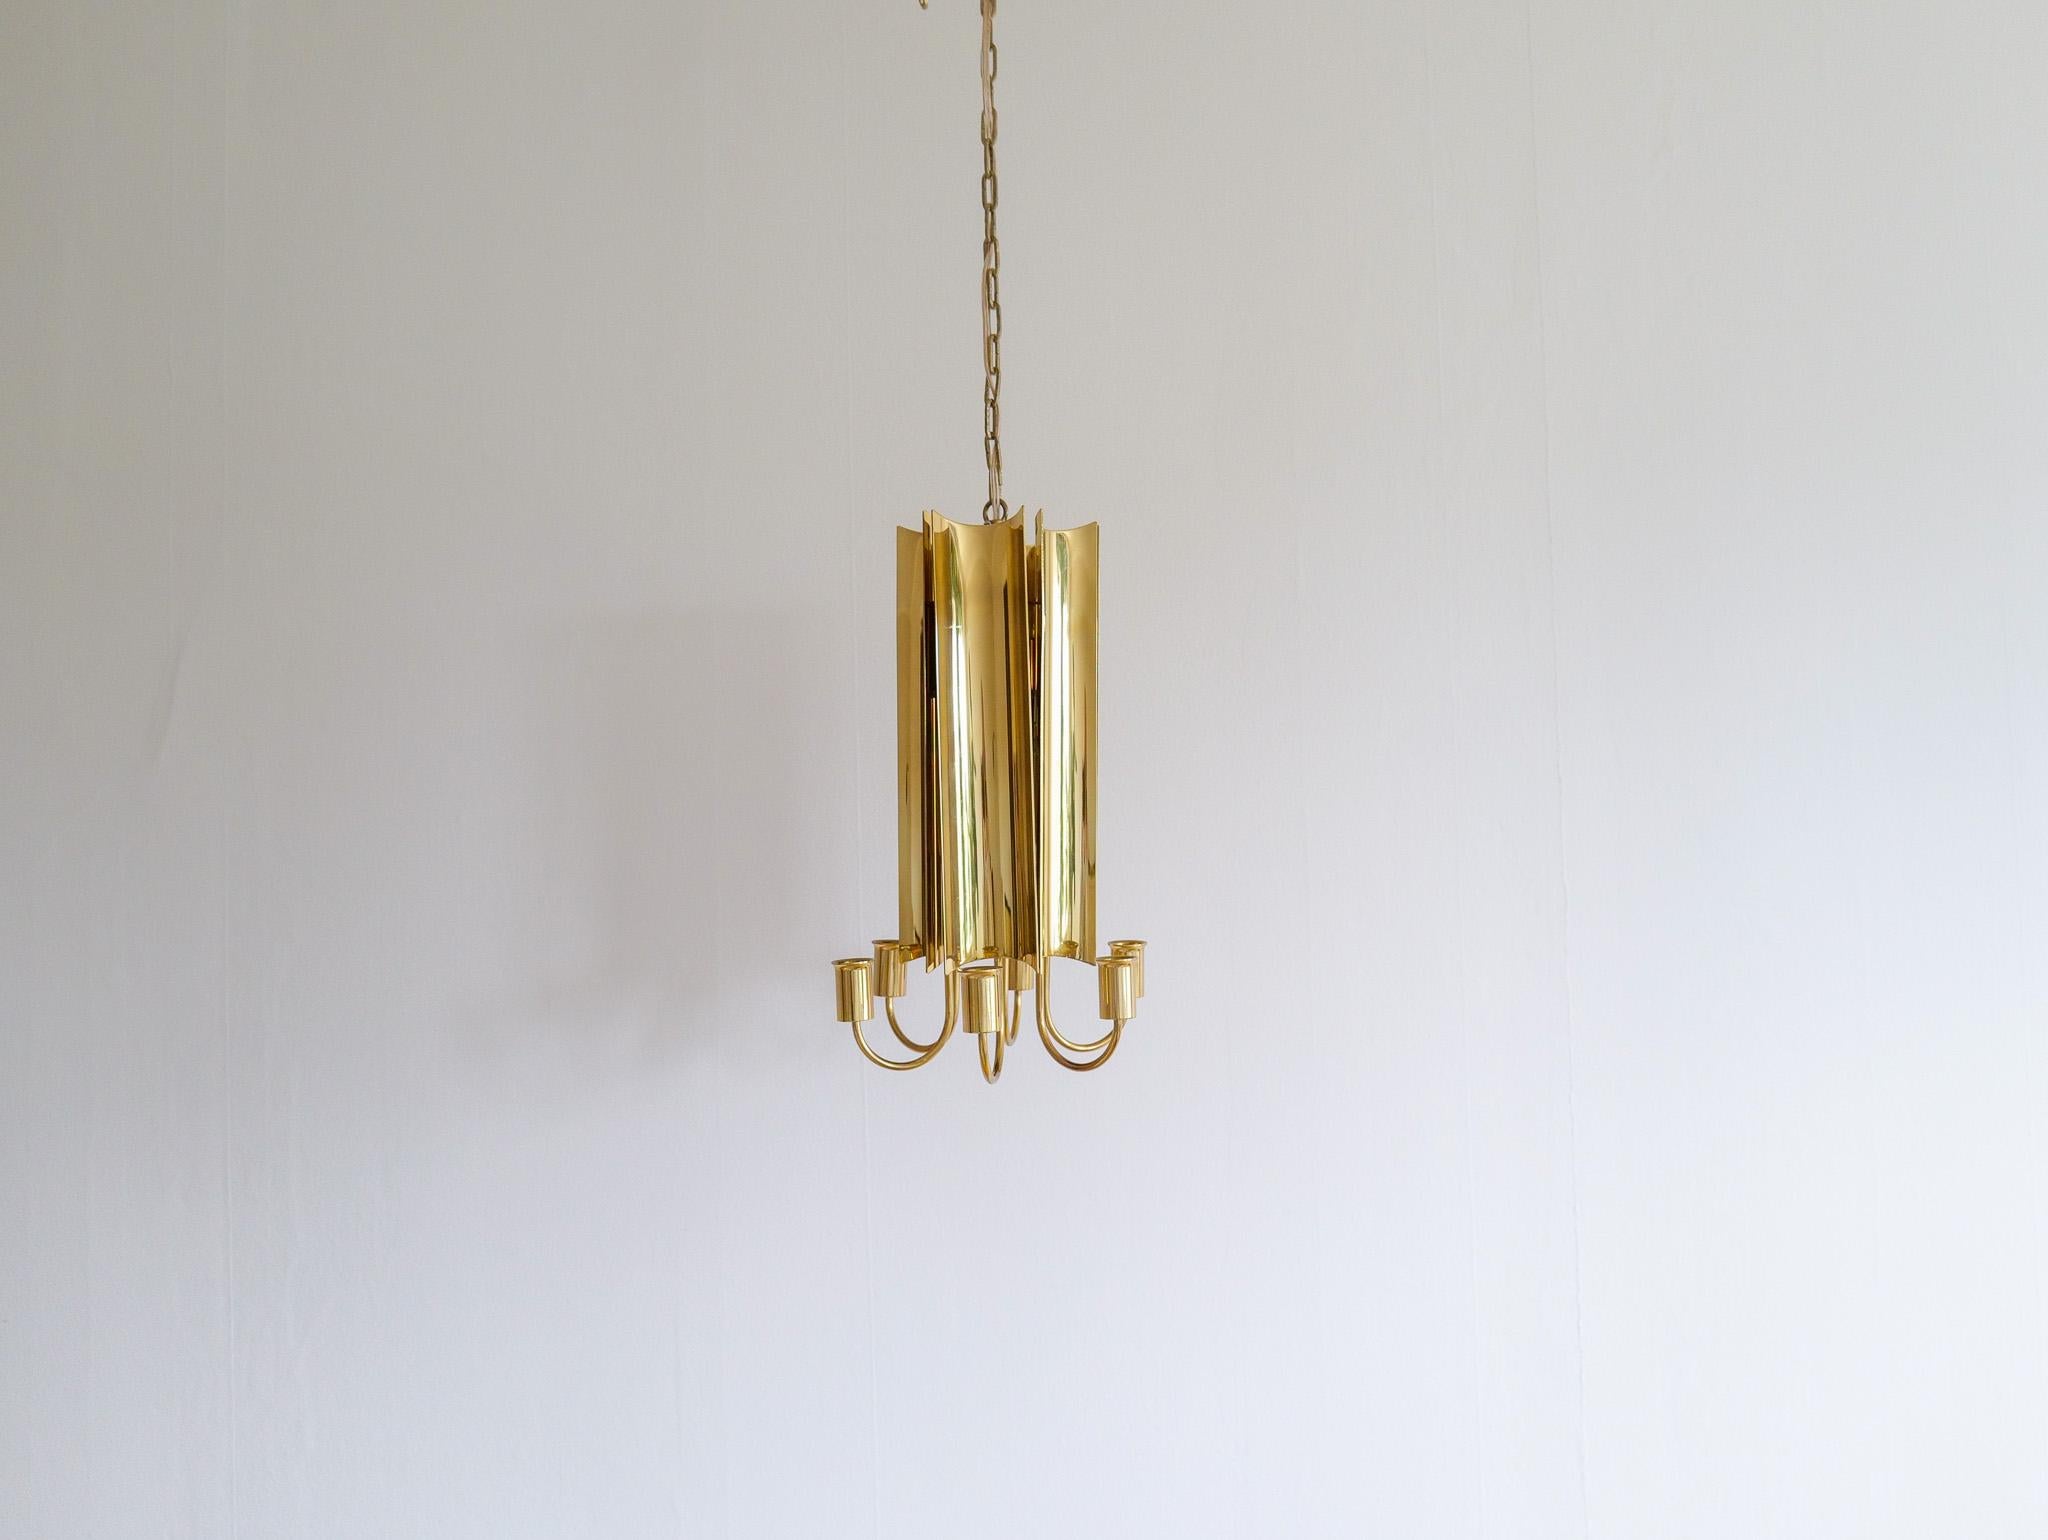 This rare brass chandelier 